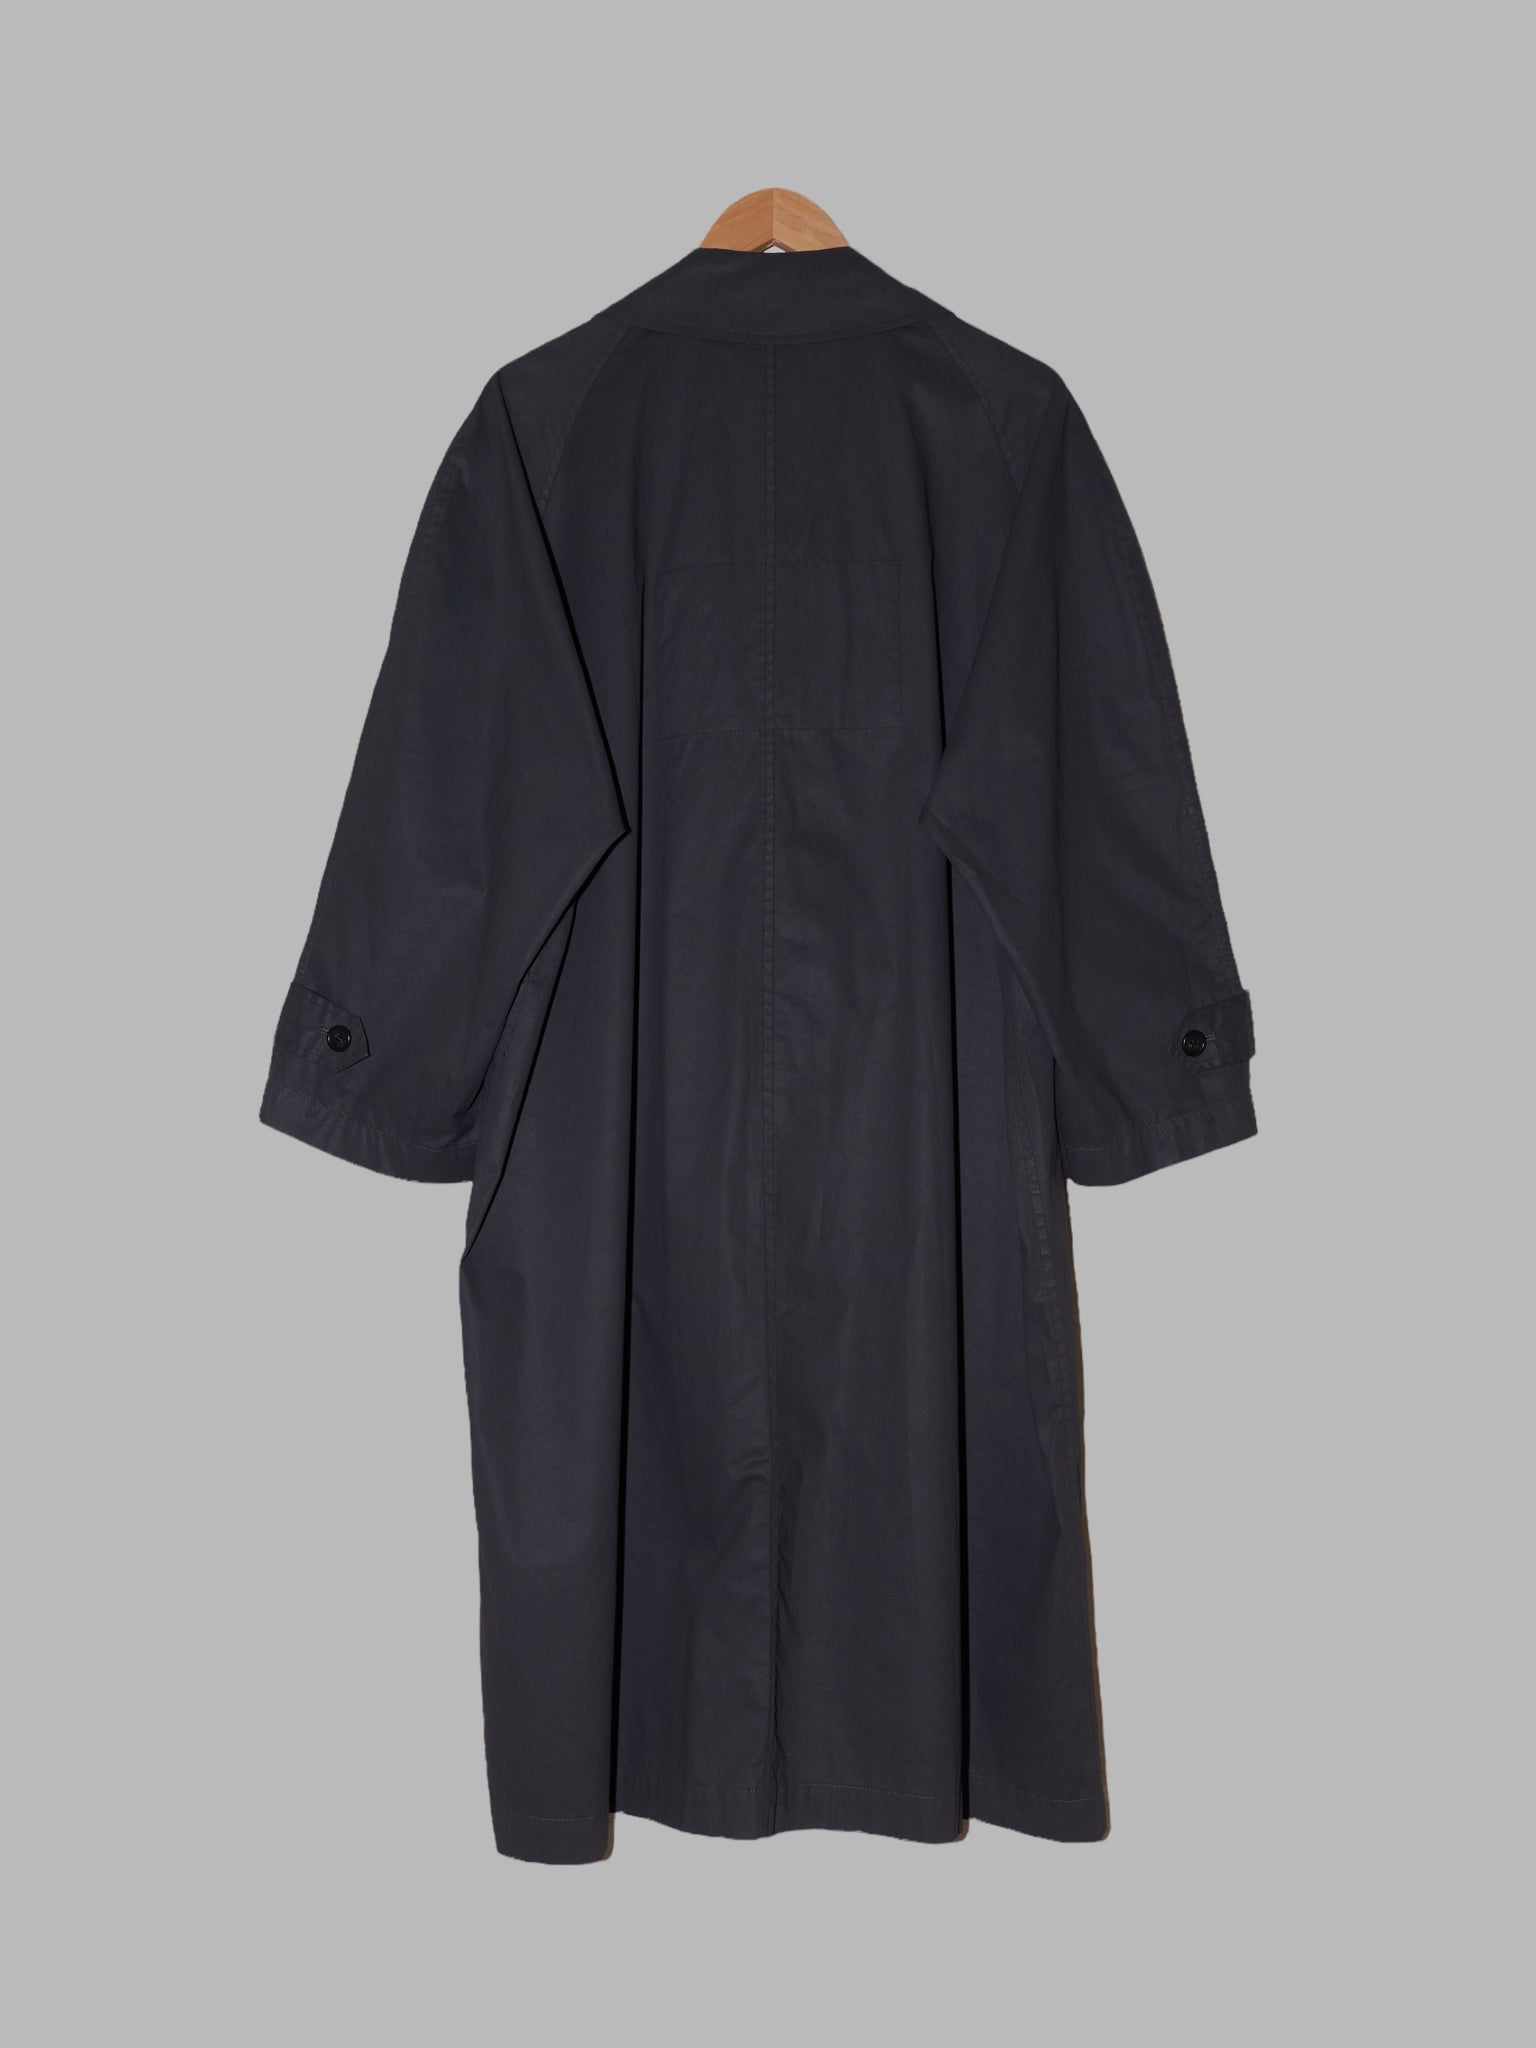 Odds On by Akira Onozuka Zucca 1987-1988 dark grey coated cotton rectangle coat